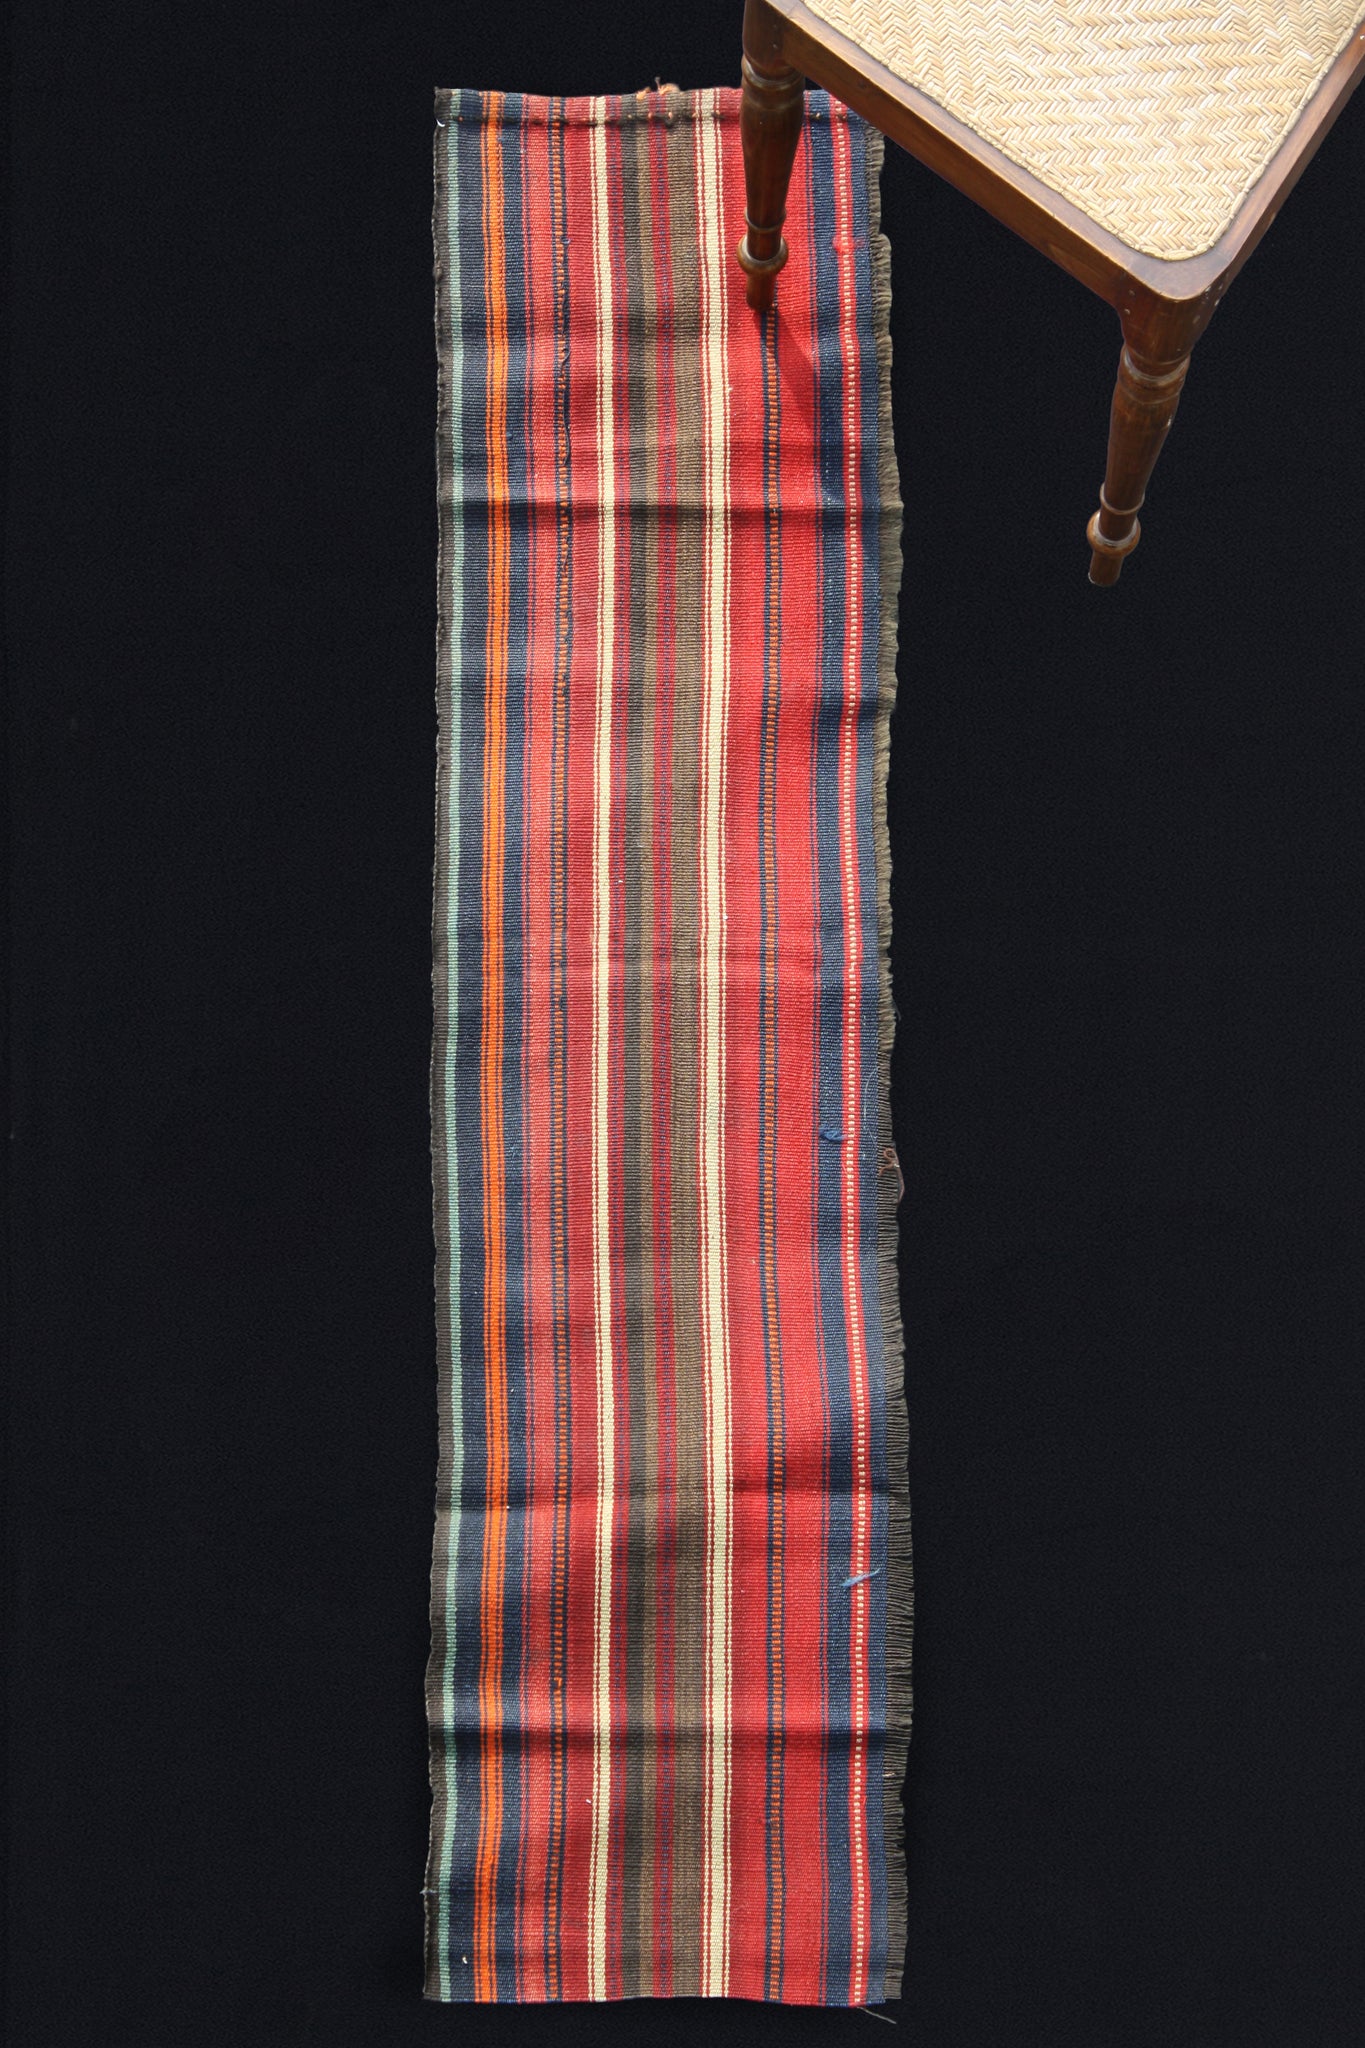 Acik Heybe With Red, Blue, Orange And Grey Stripes (1' 3.5" x 5' 10")